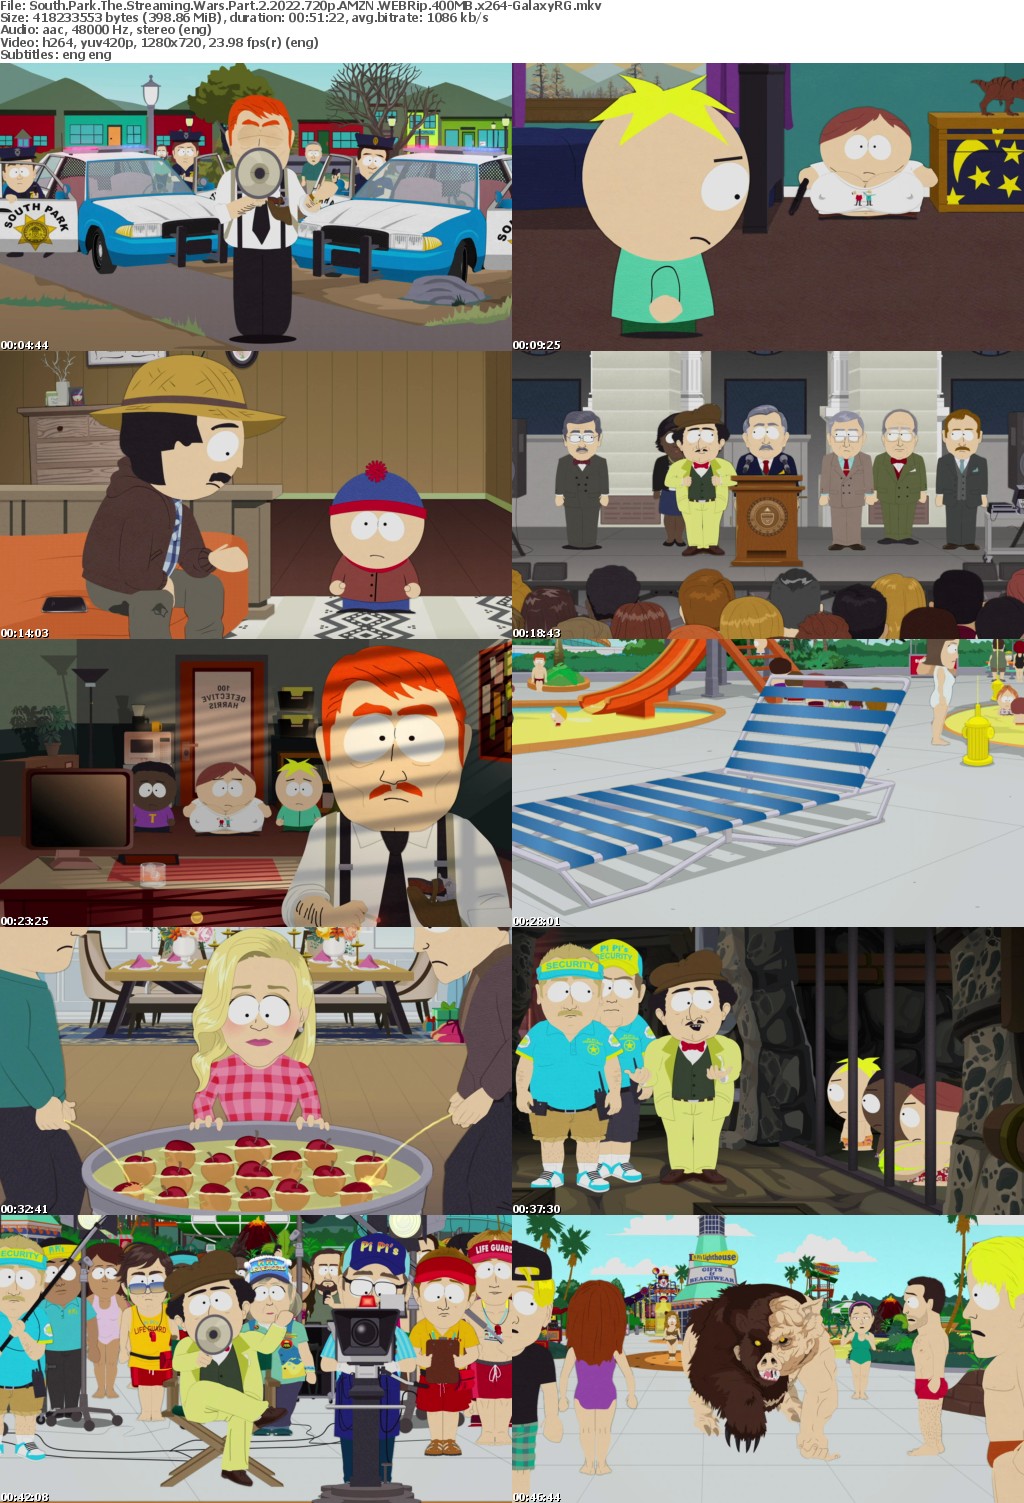 South Park The Streaming Wars Part 2 2022 720p AMZN WEBRip 400MB x264-GalaxyRG